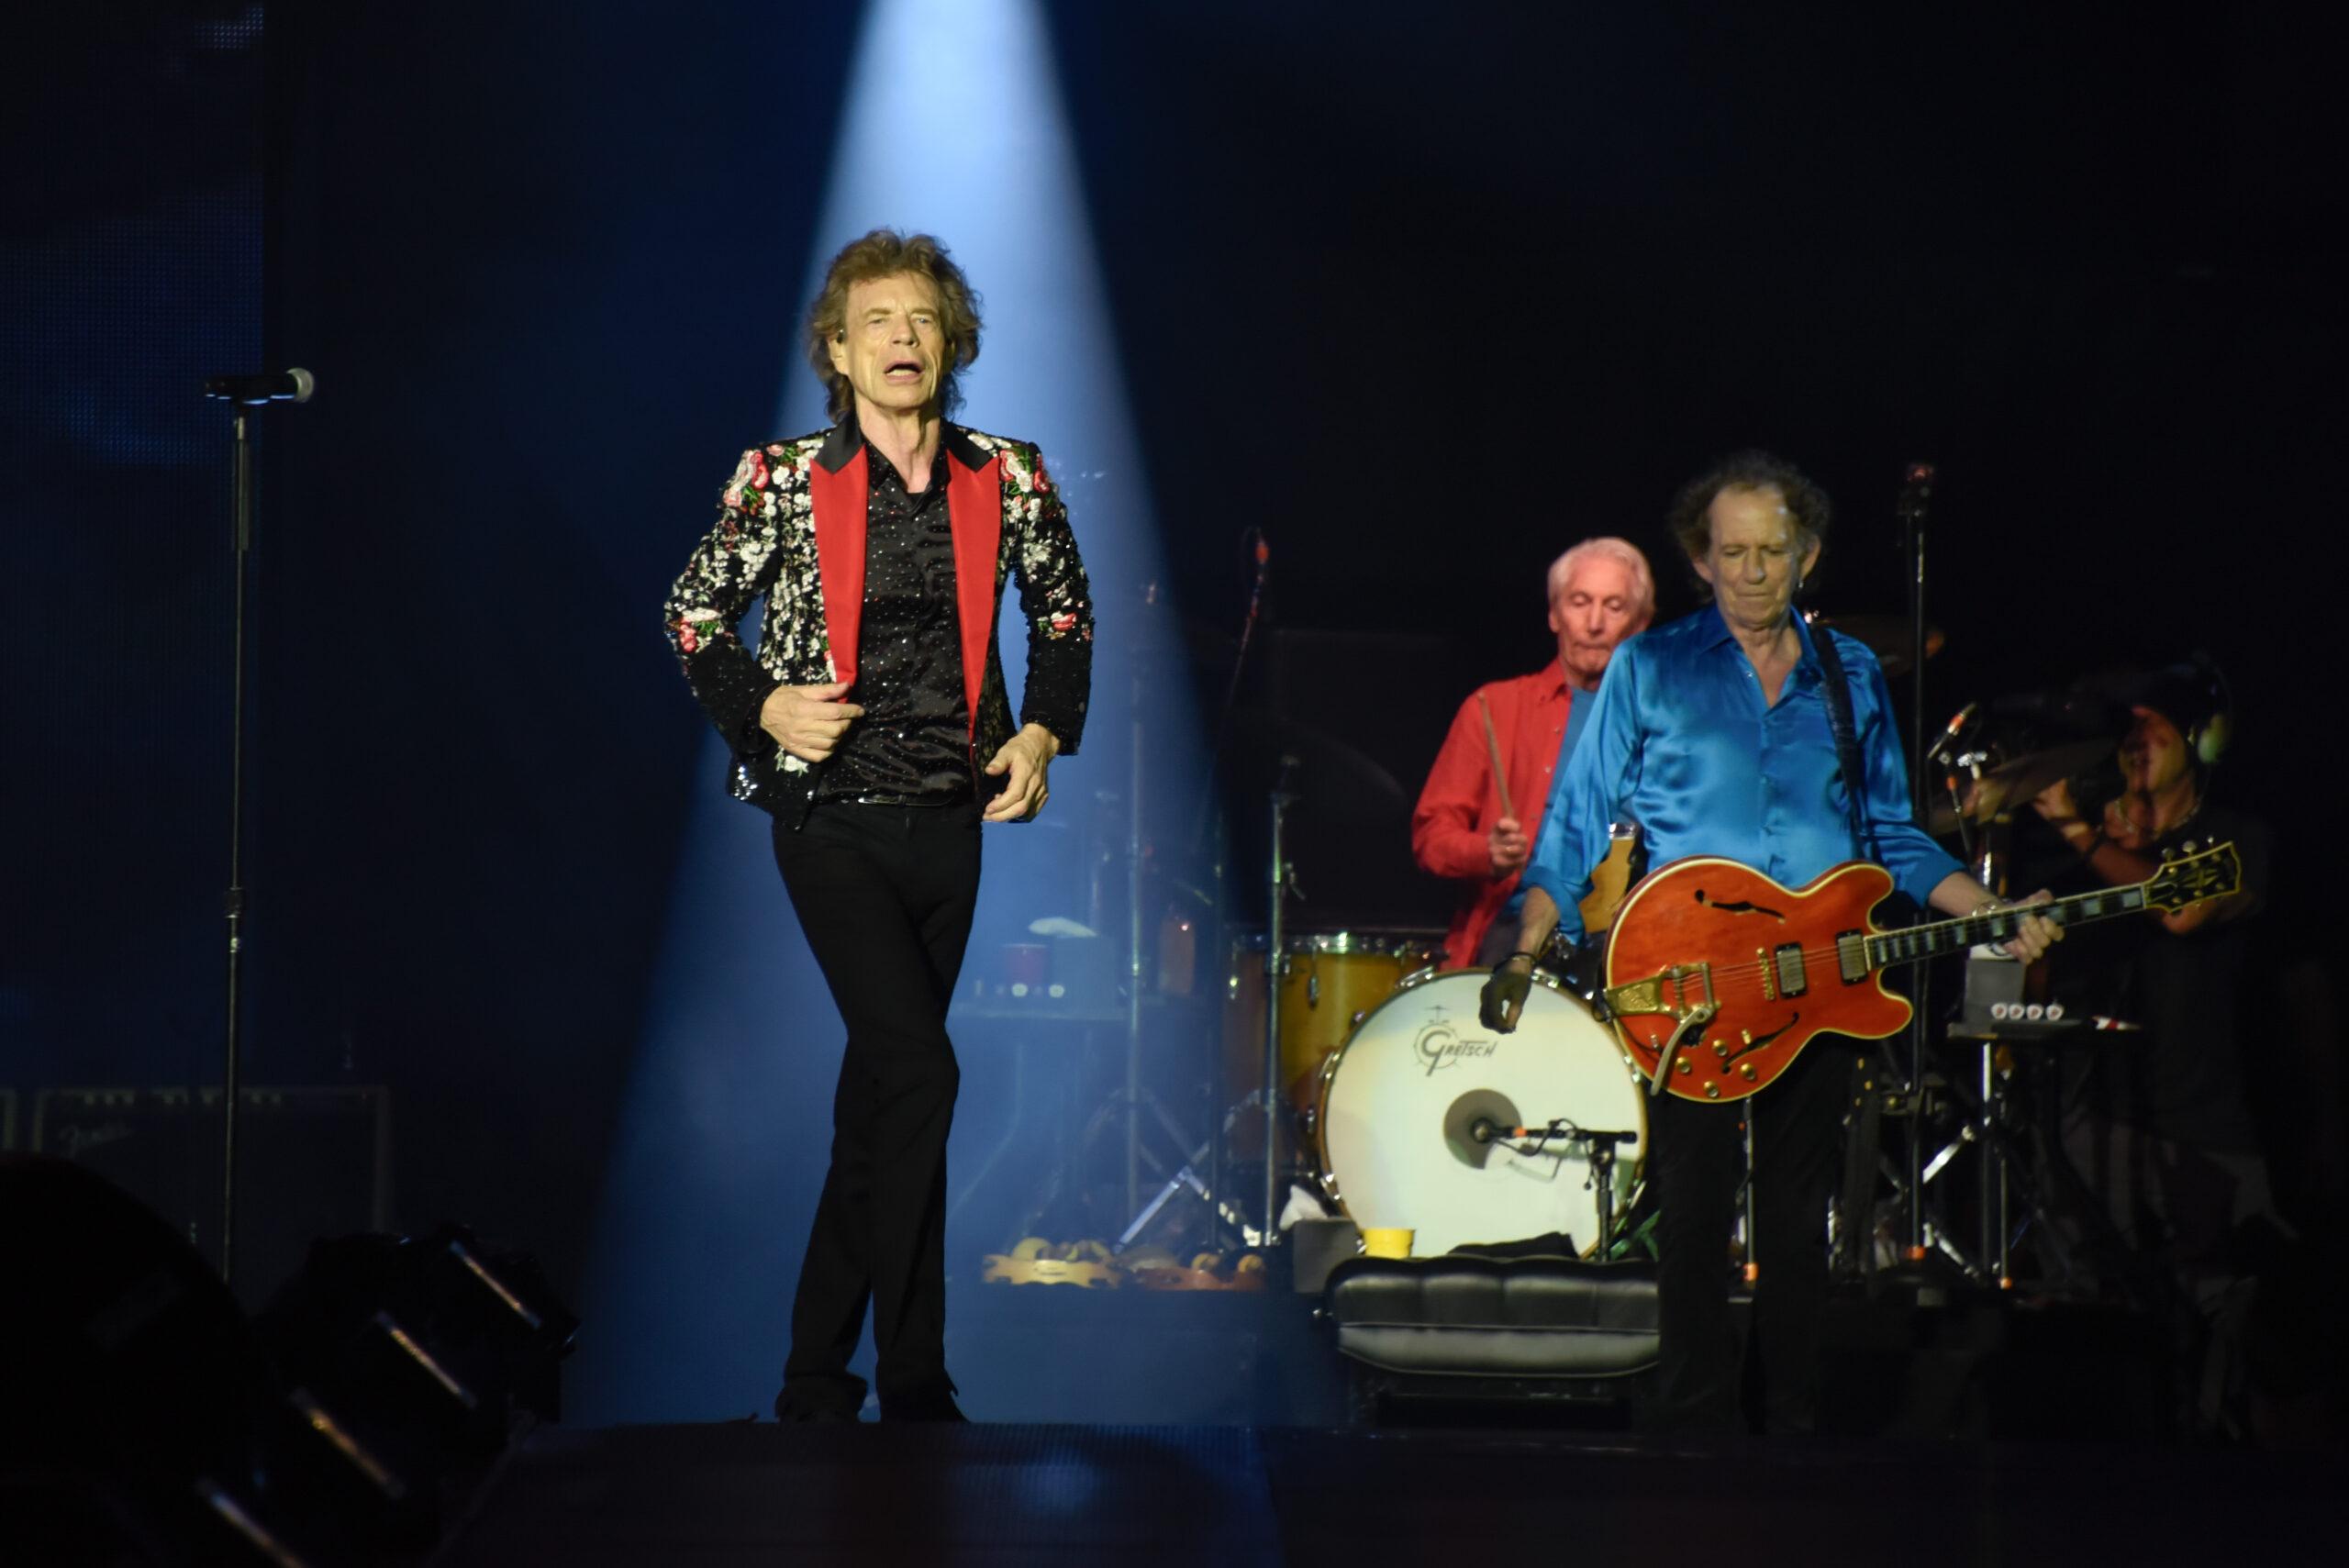 Archive Rolling Stones Drummer Charlie Watts Dies at 80 Miami Gardens FL